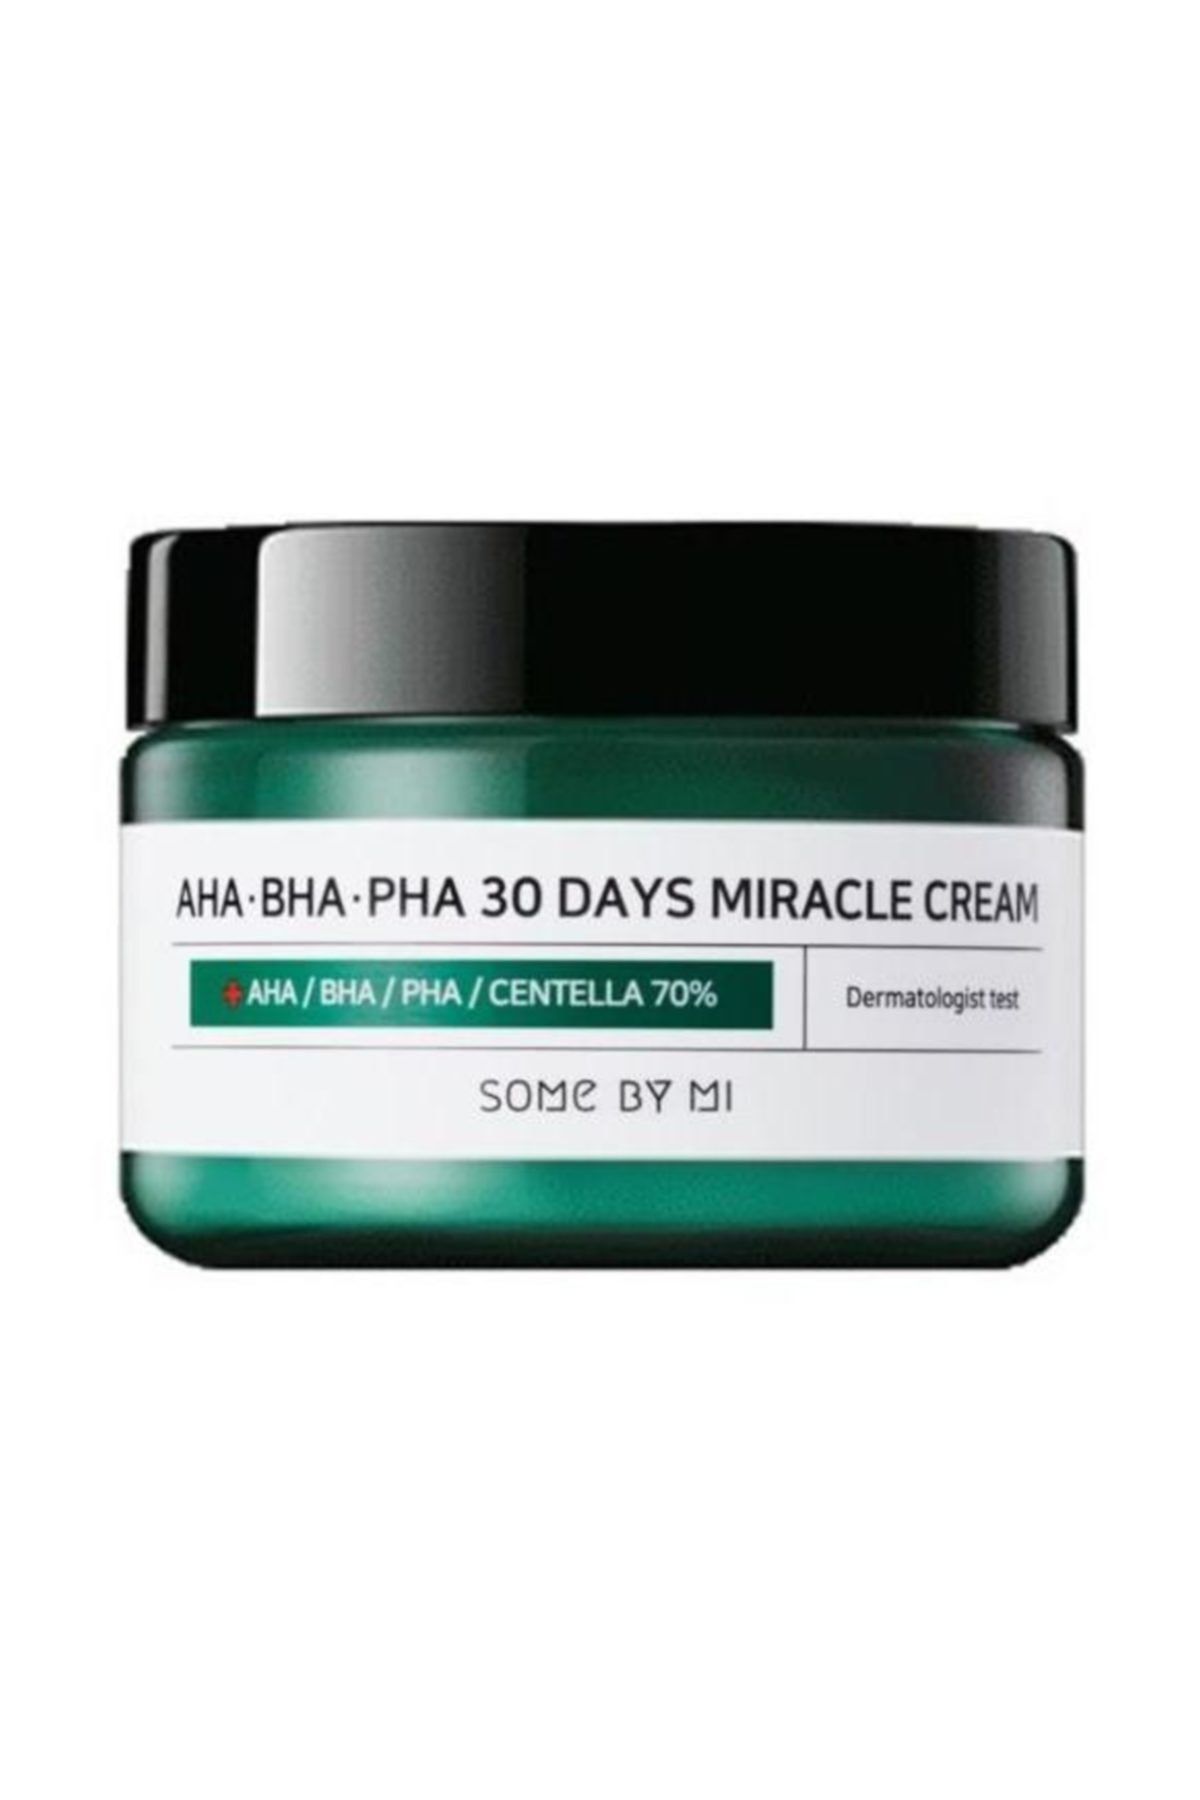 Some By Mi Onarıcı Centella Kremi - AHA BHA PHA 30 Days Miracle Cream 50 ml 8809326334224